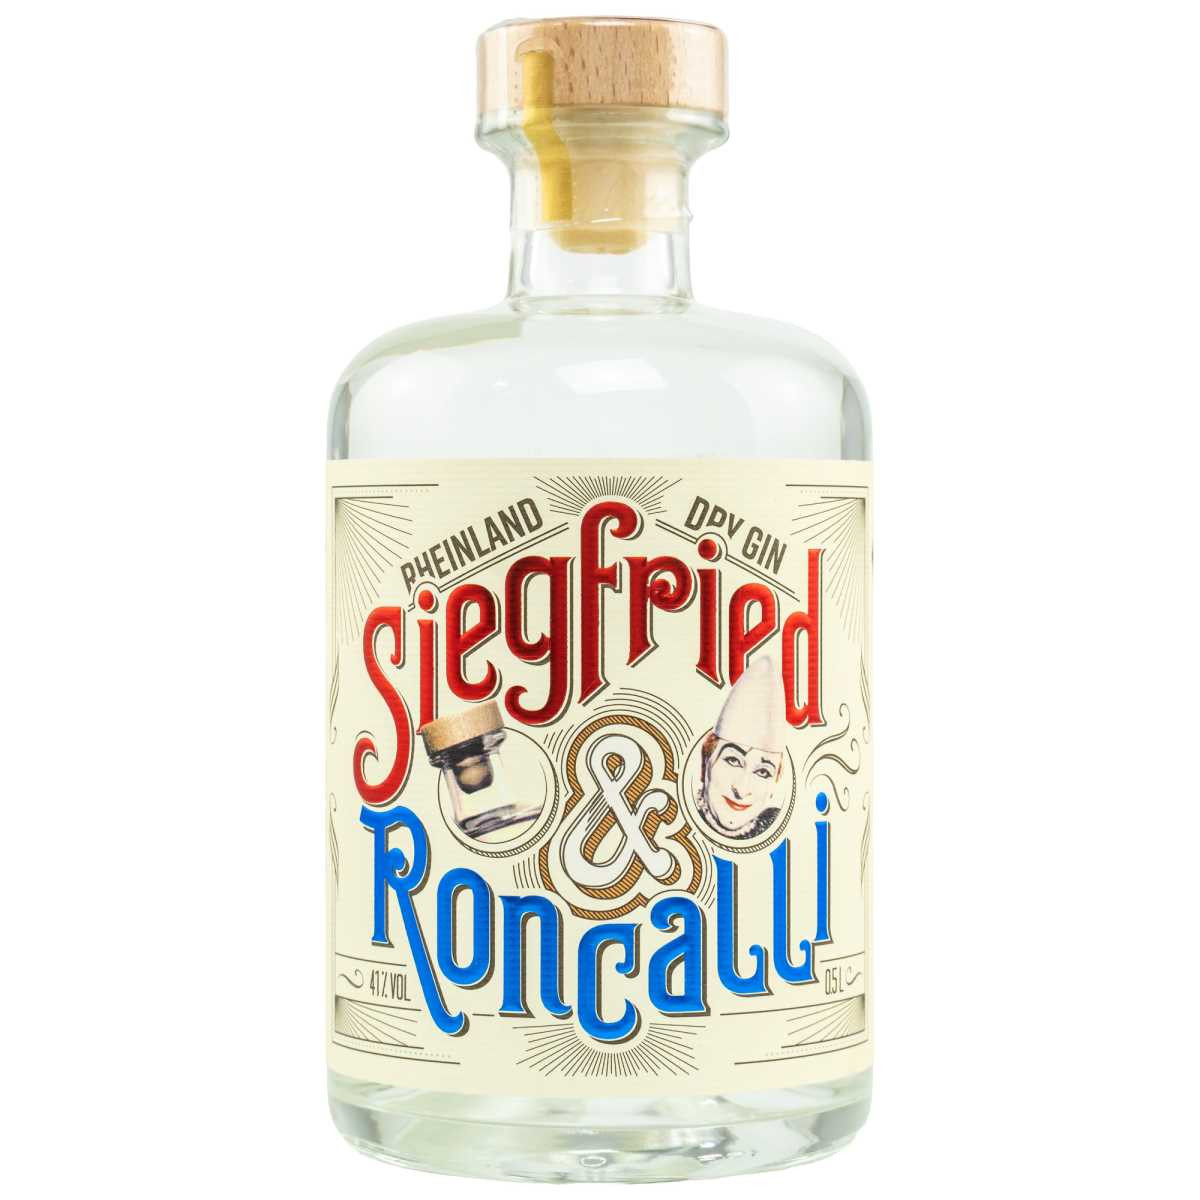 Siegfried 30,90 Rheinland € Dry Gin,